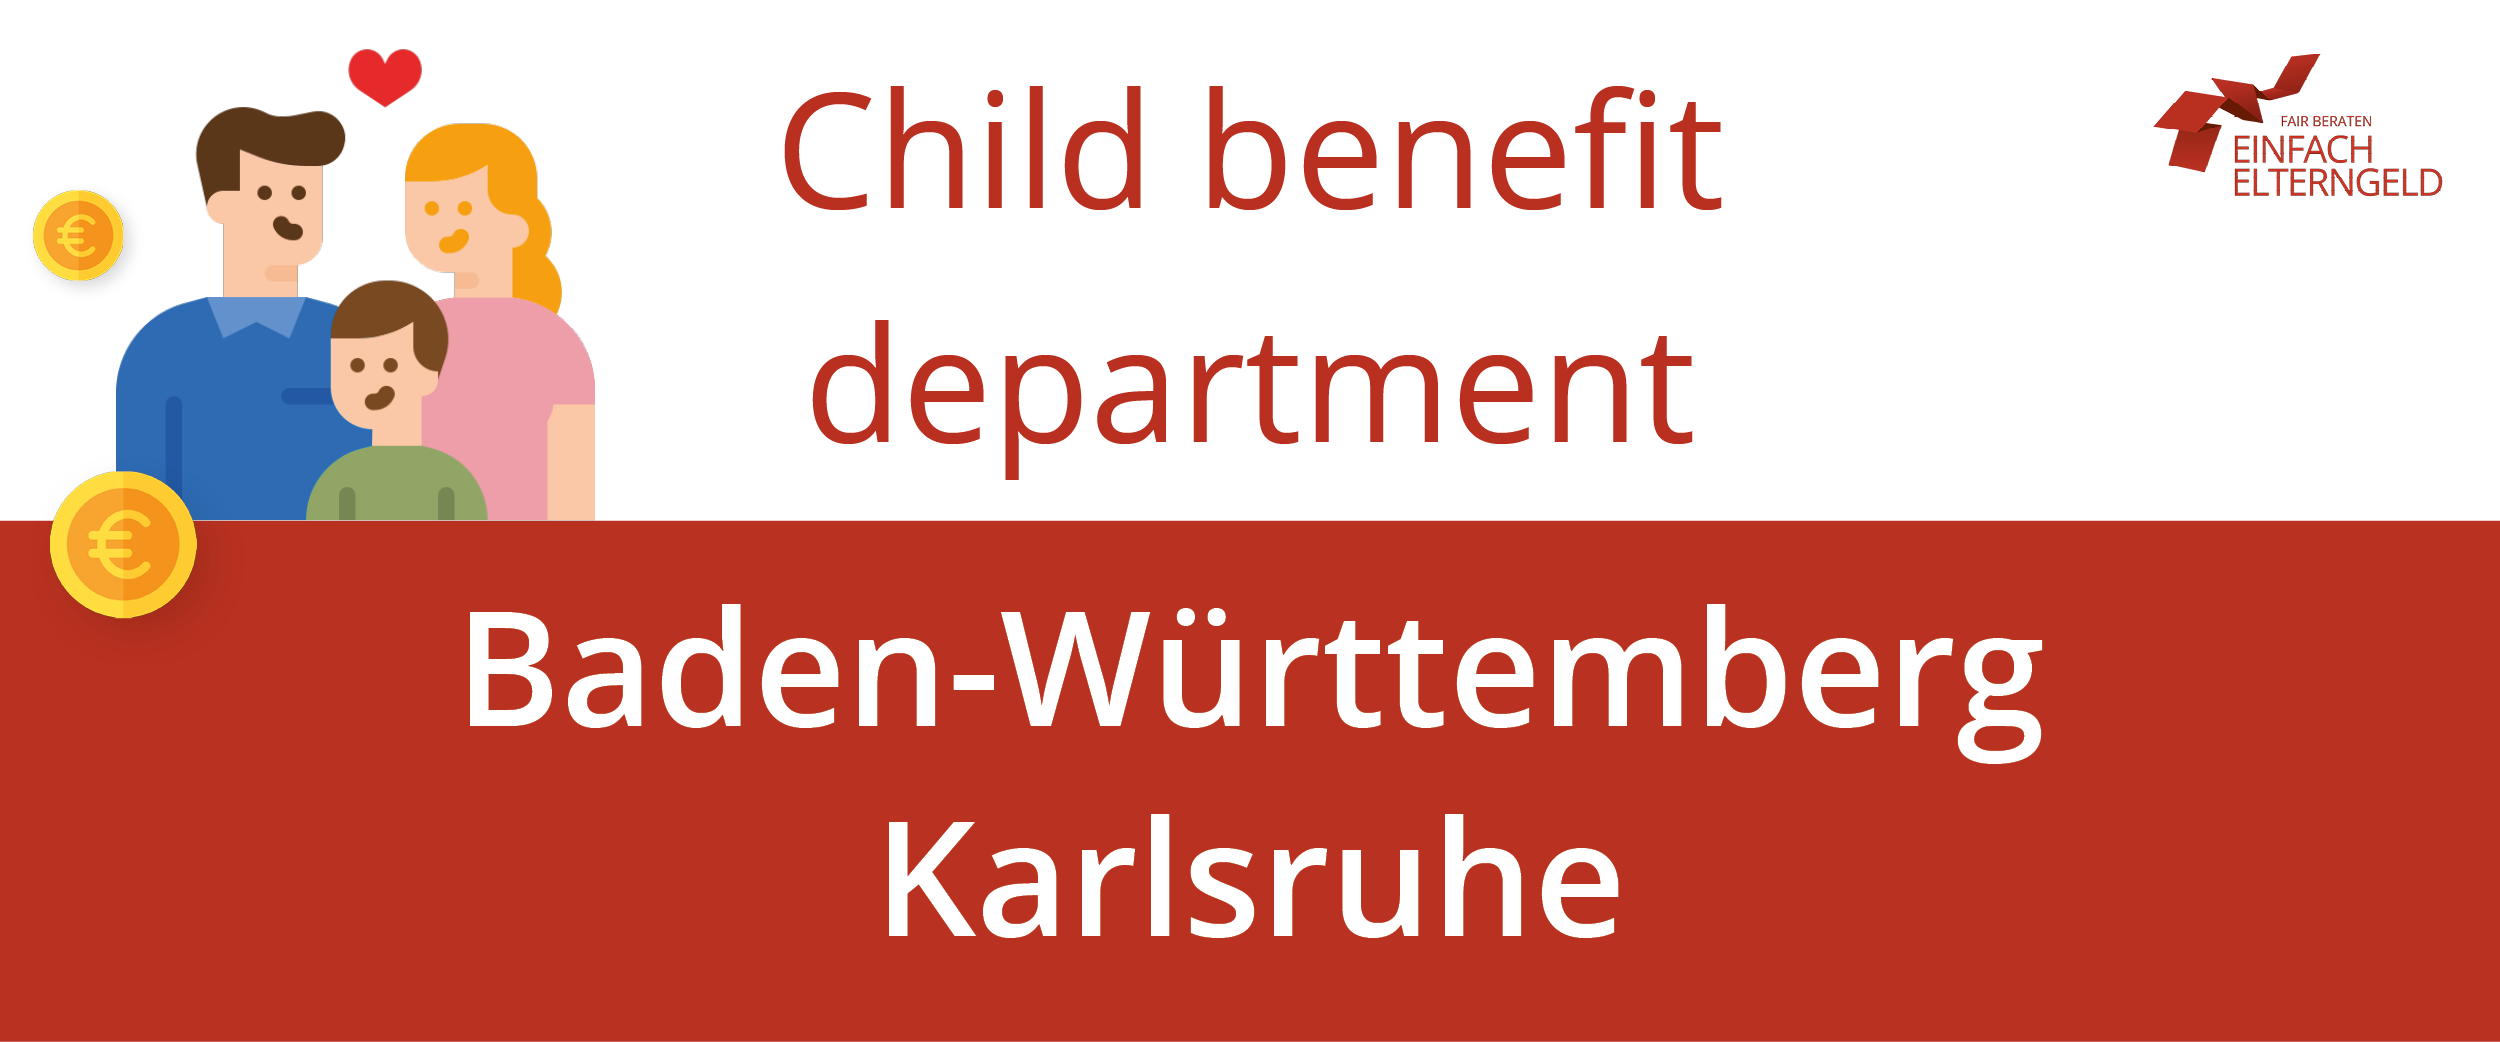 We present you the Child benefit department Baden-Württemberg Karlsruhe.